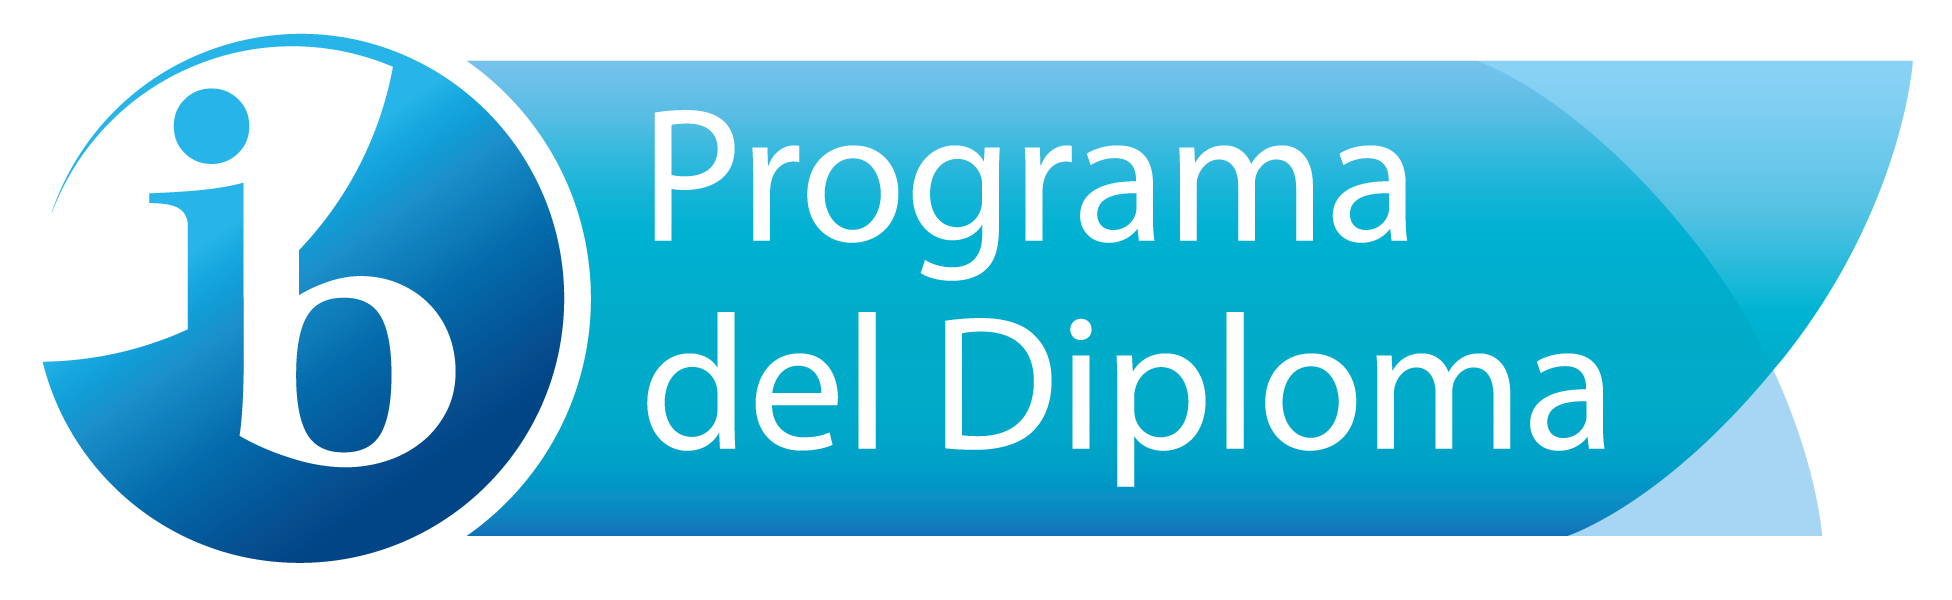 dp-programme-logo-es